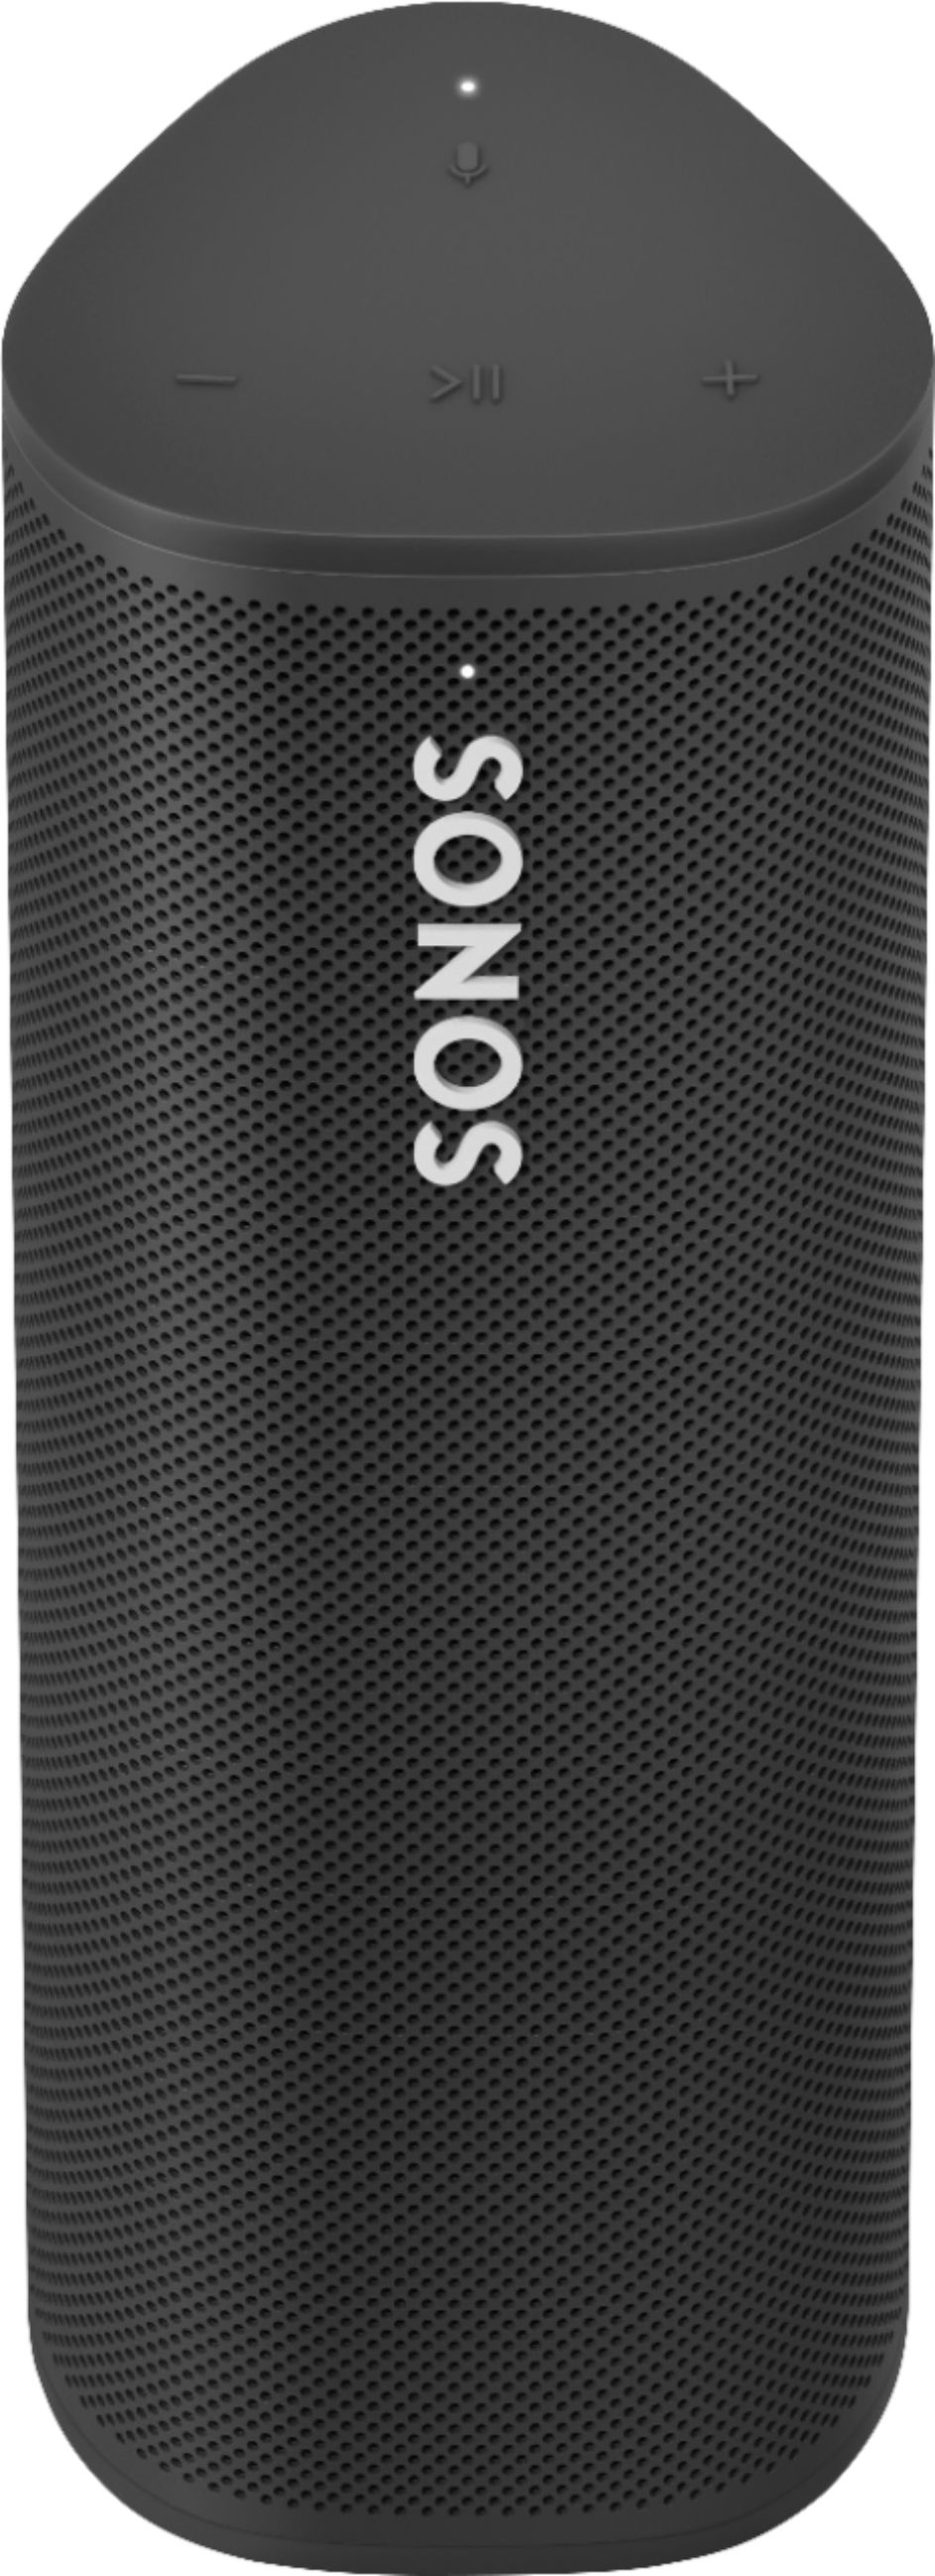 ROAM1US1BLK | Sonos Roam, Black, Each